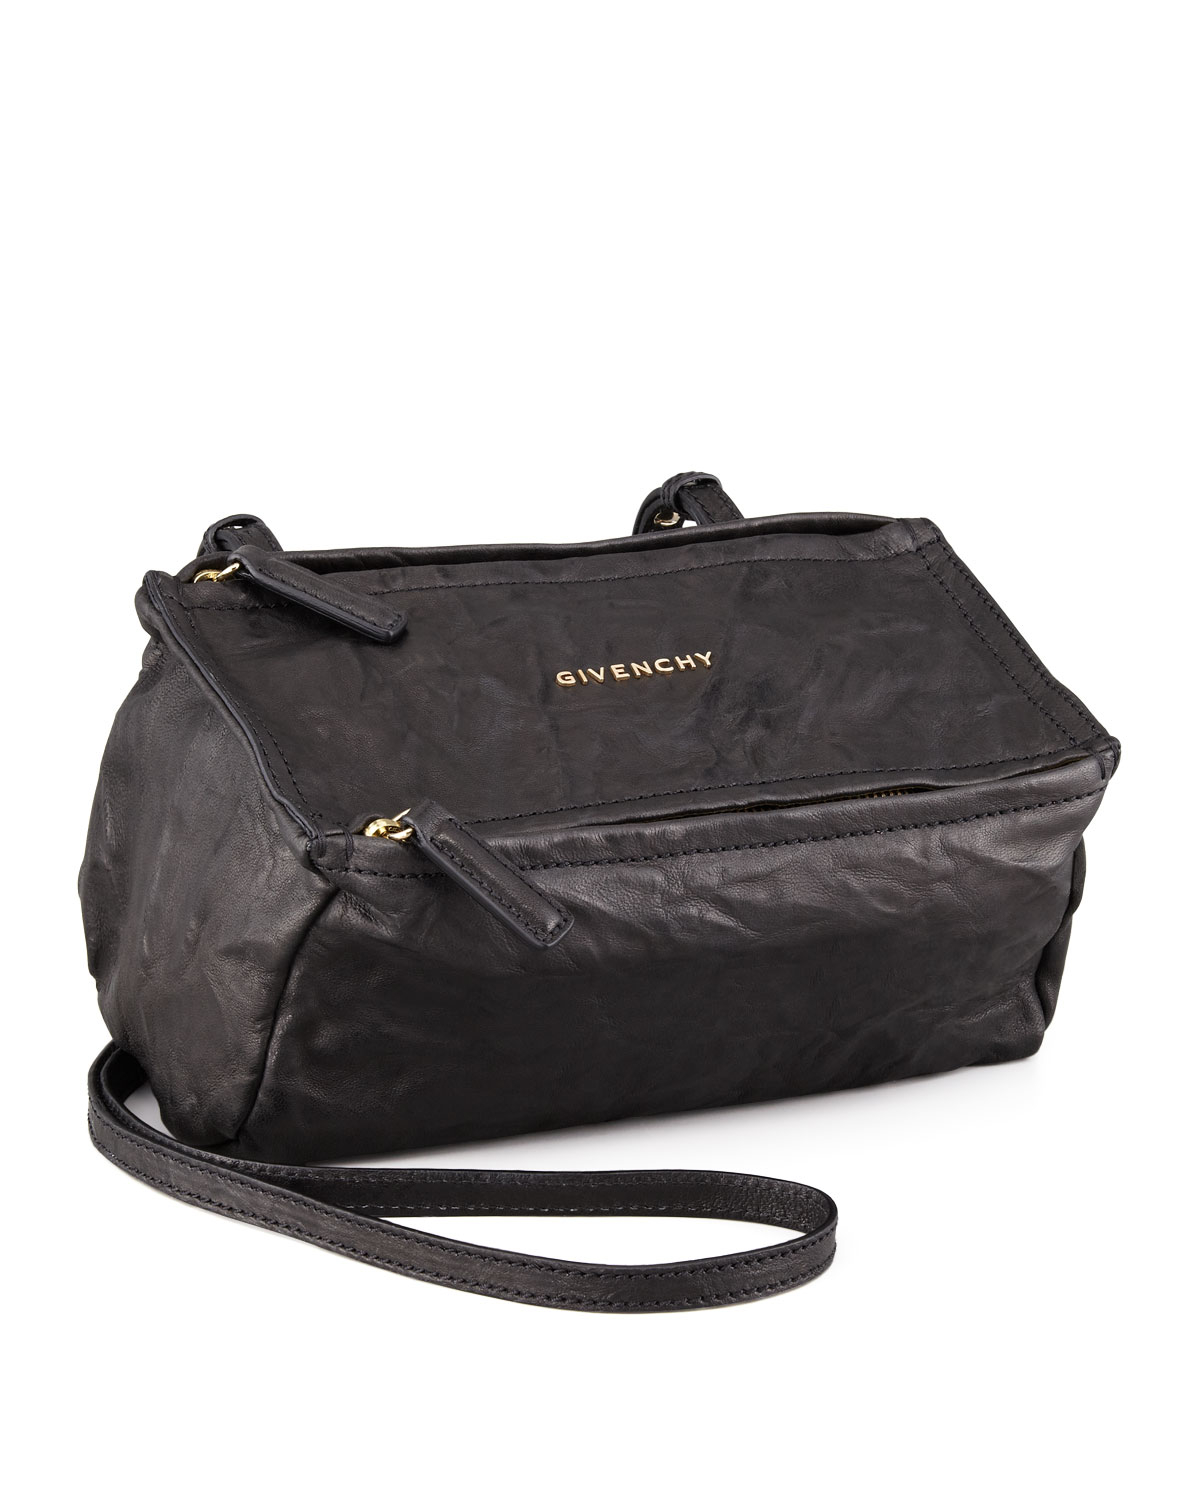 Givenchy Pandora Mini Leather Crossbody Bag in Black  Lyst